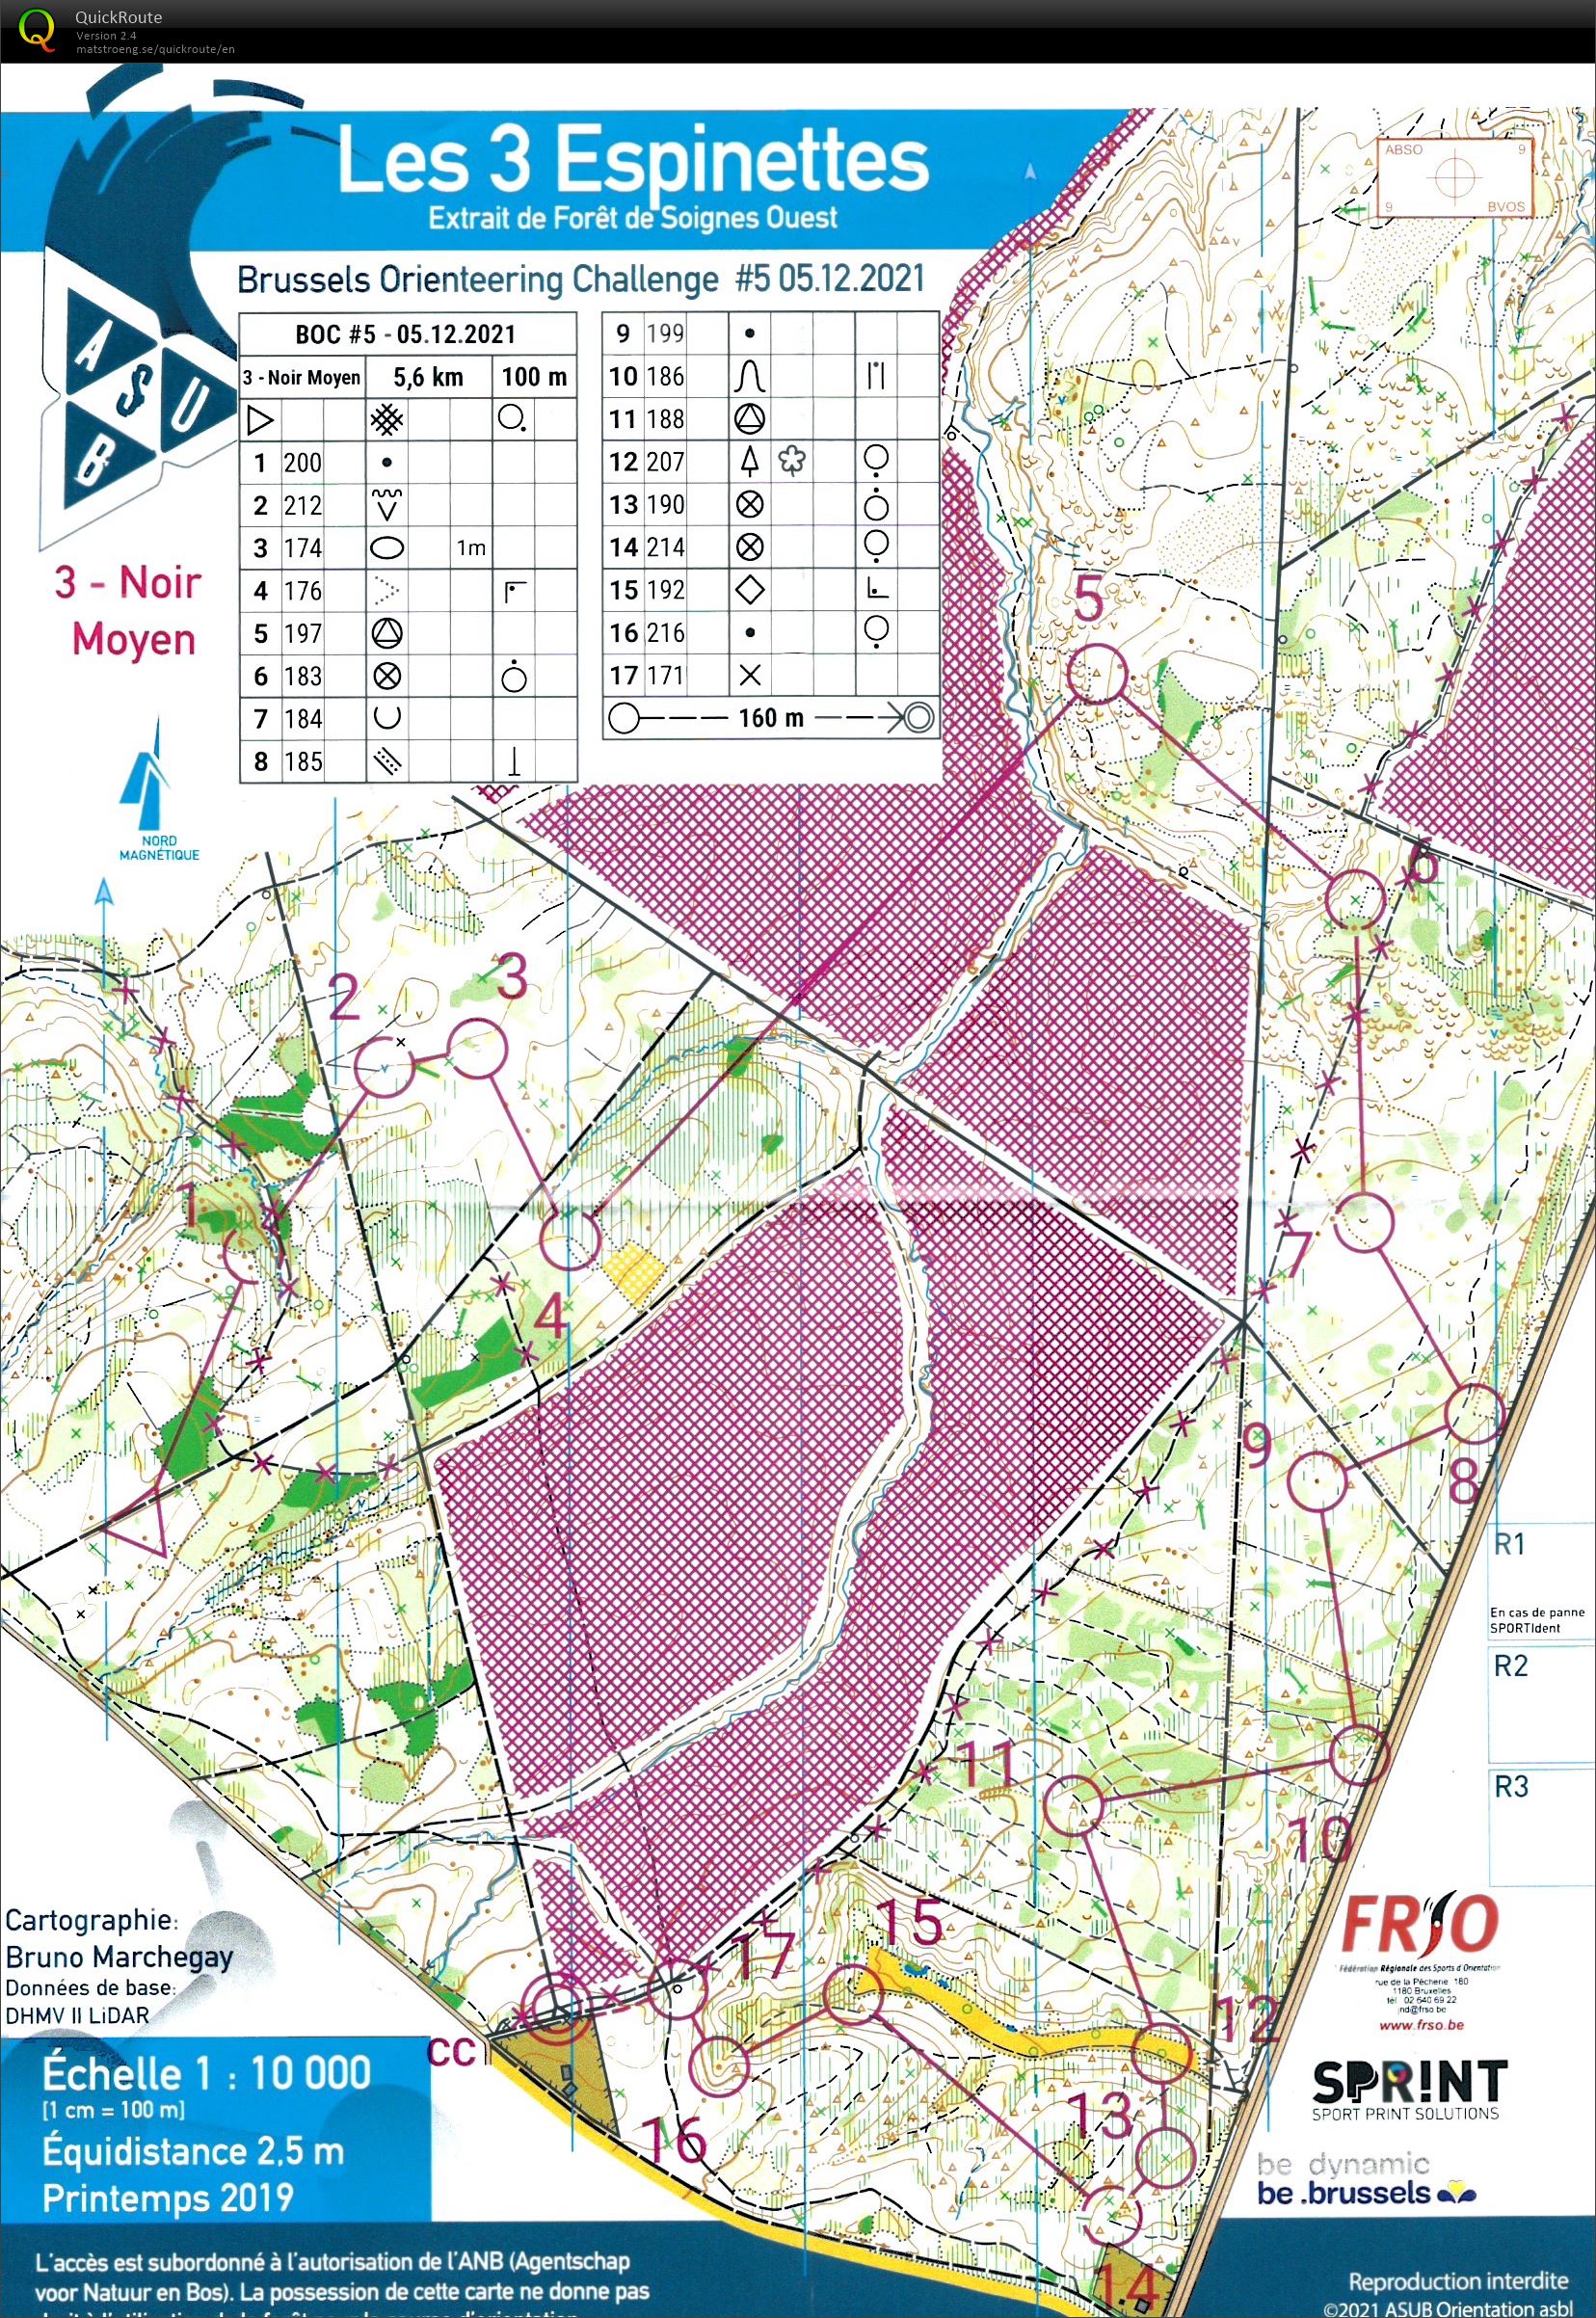 Brussels Orienteering Challenge - Sint-Genesius-Rode (05.12.2021)